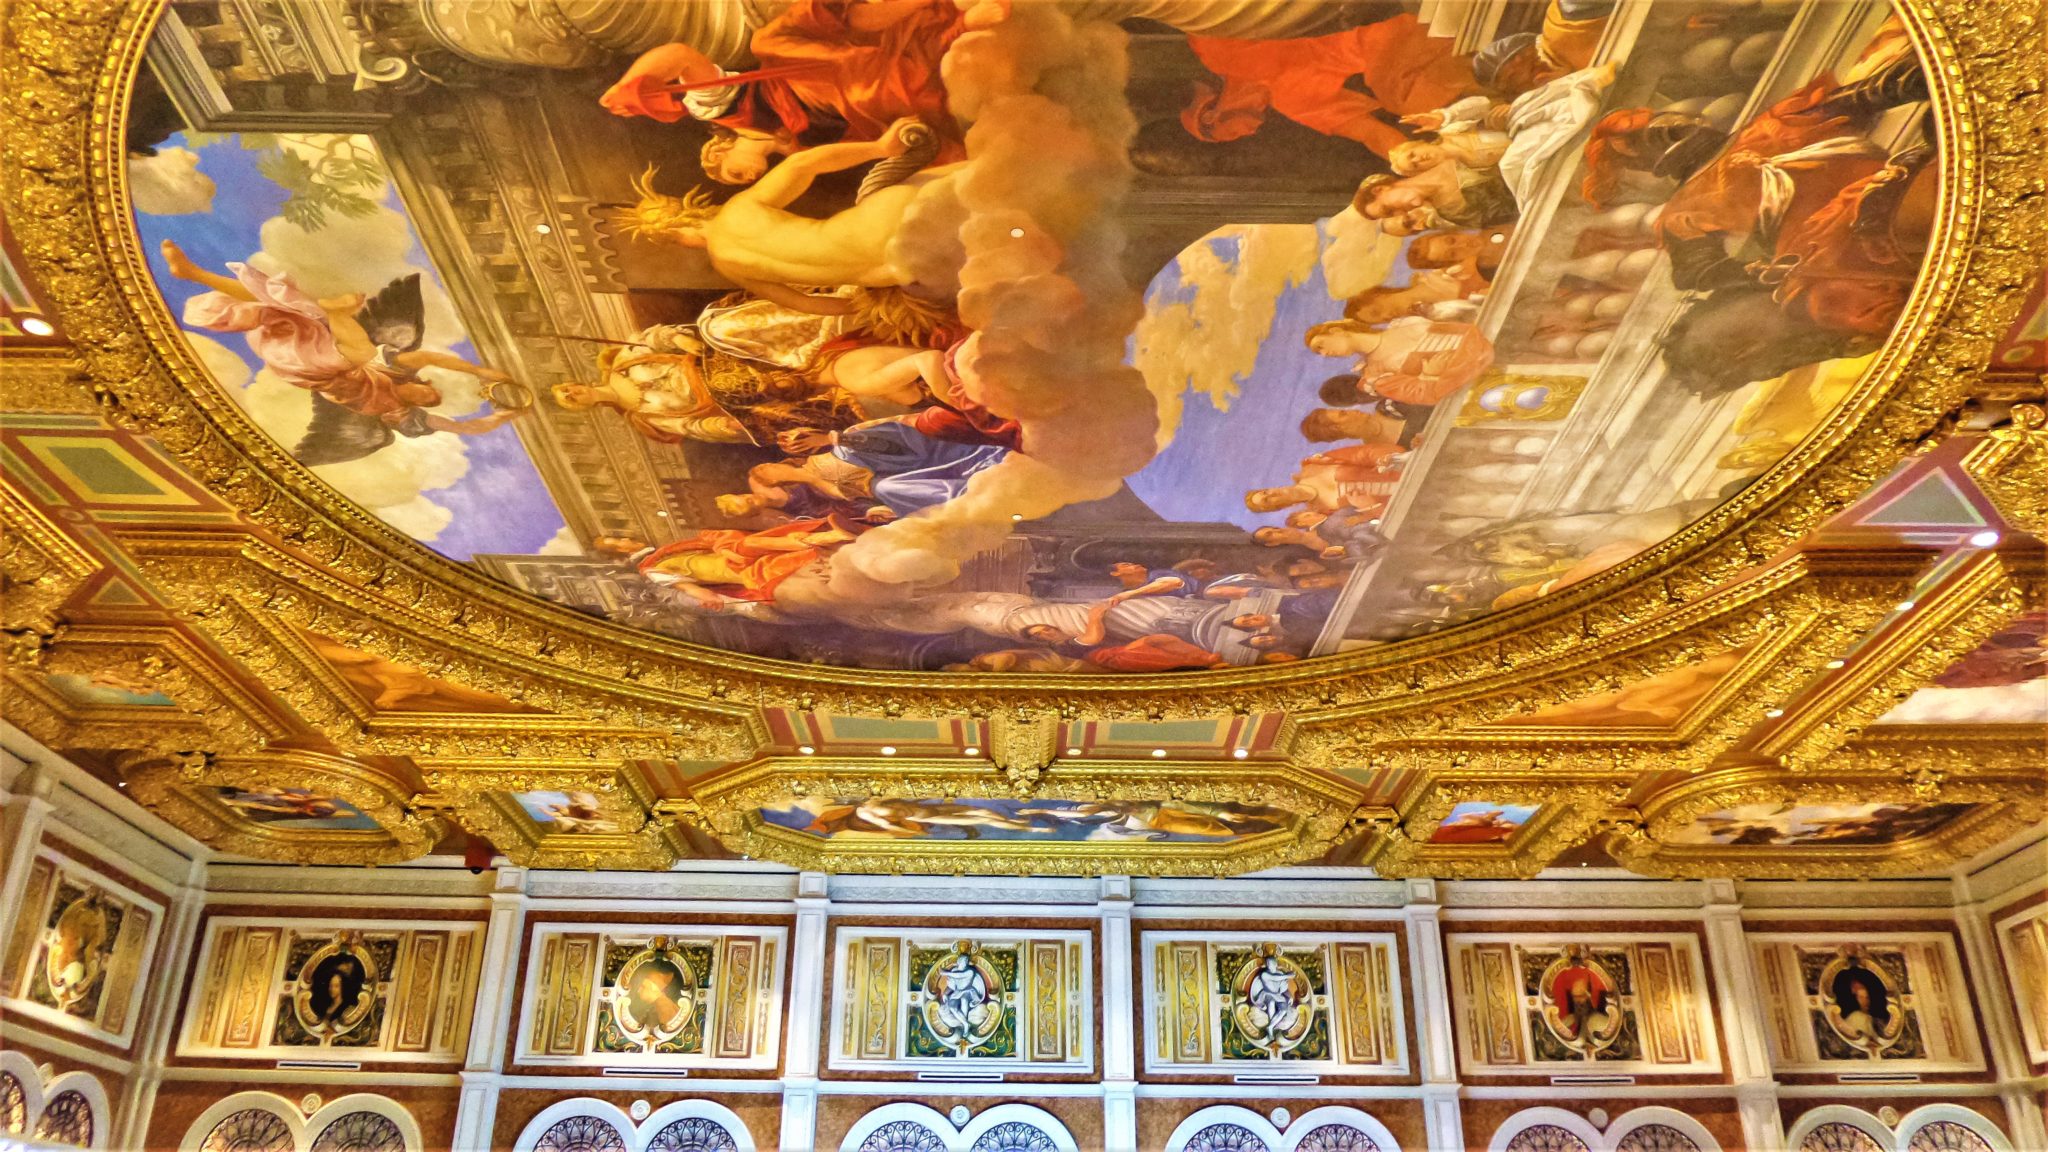 Venetian hotel ceiling, las vegas | Round the World Magazine